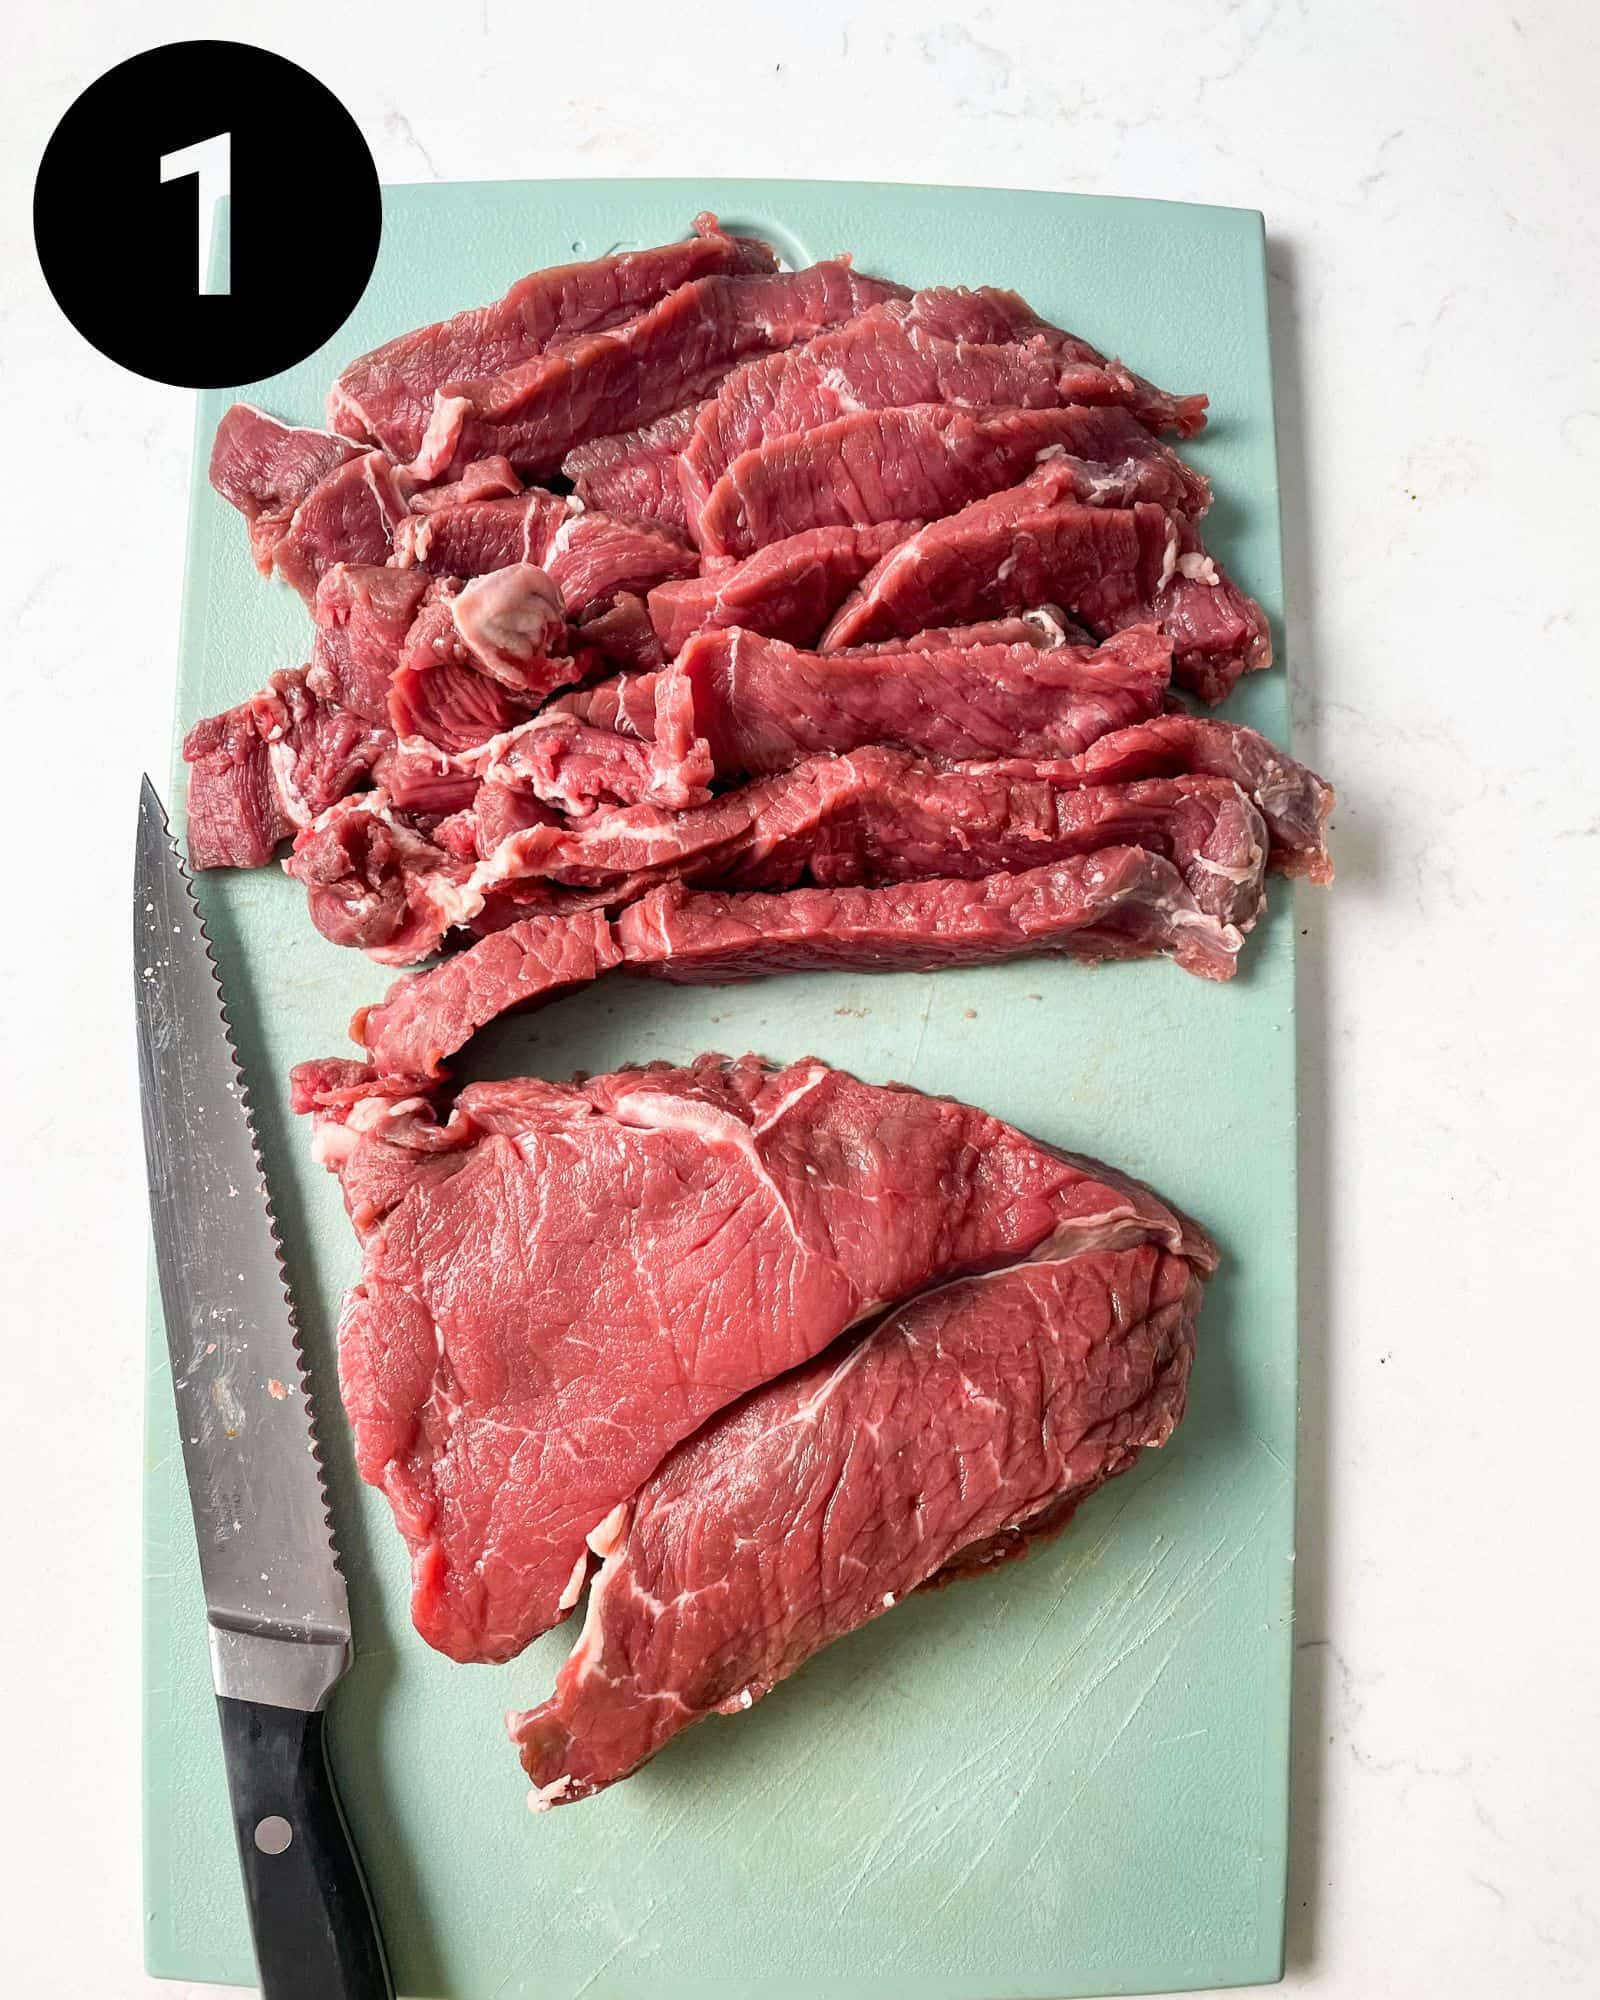 sliced sirloin steak on a cutting board.